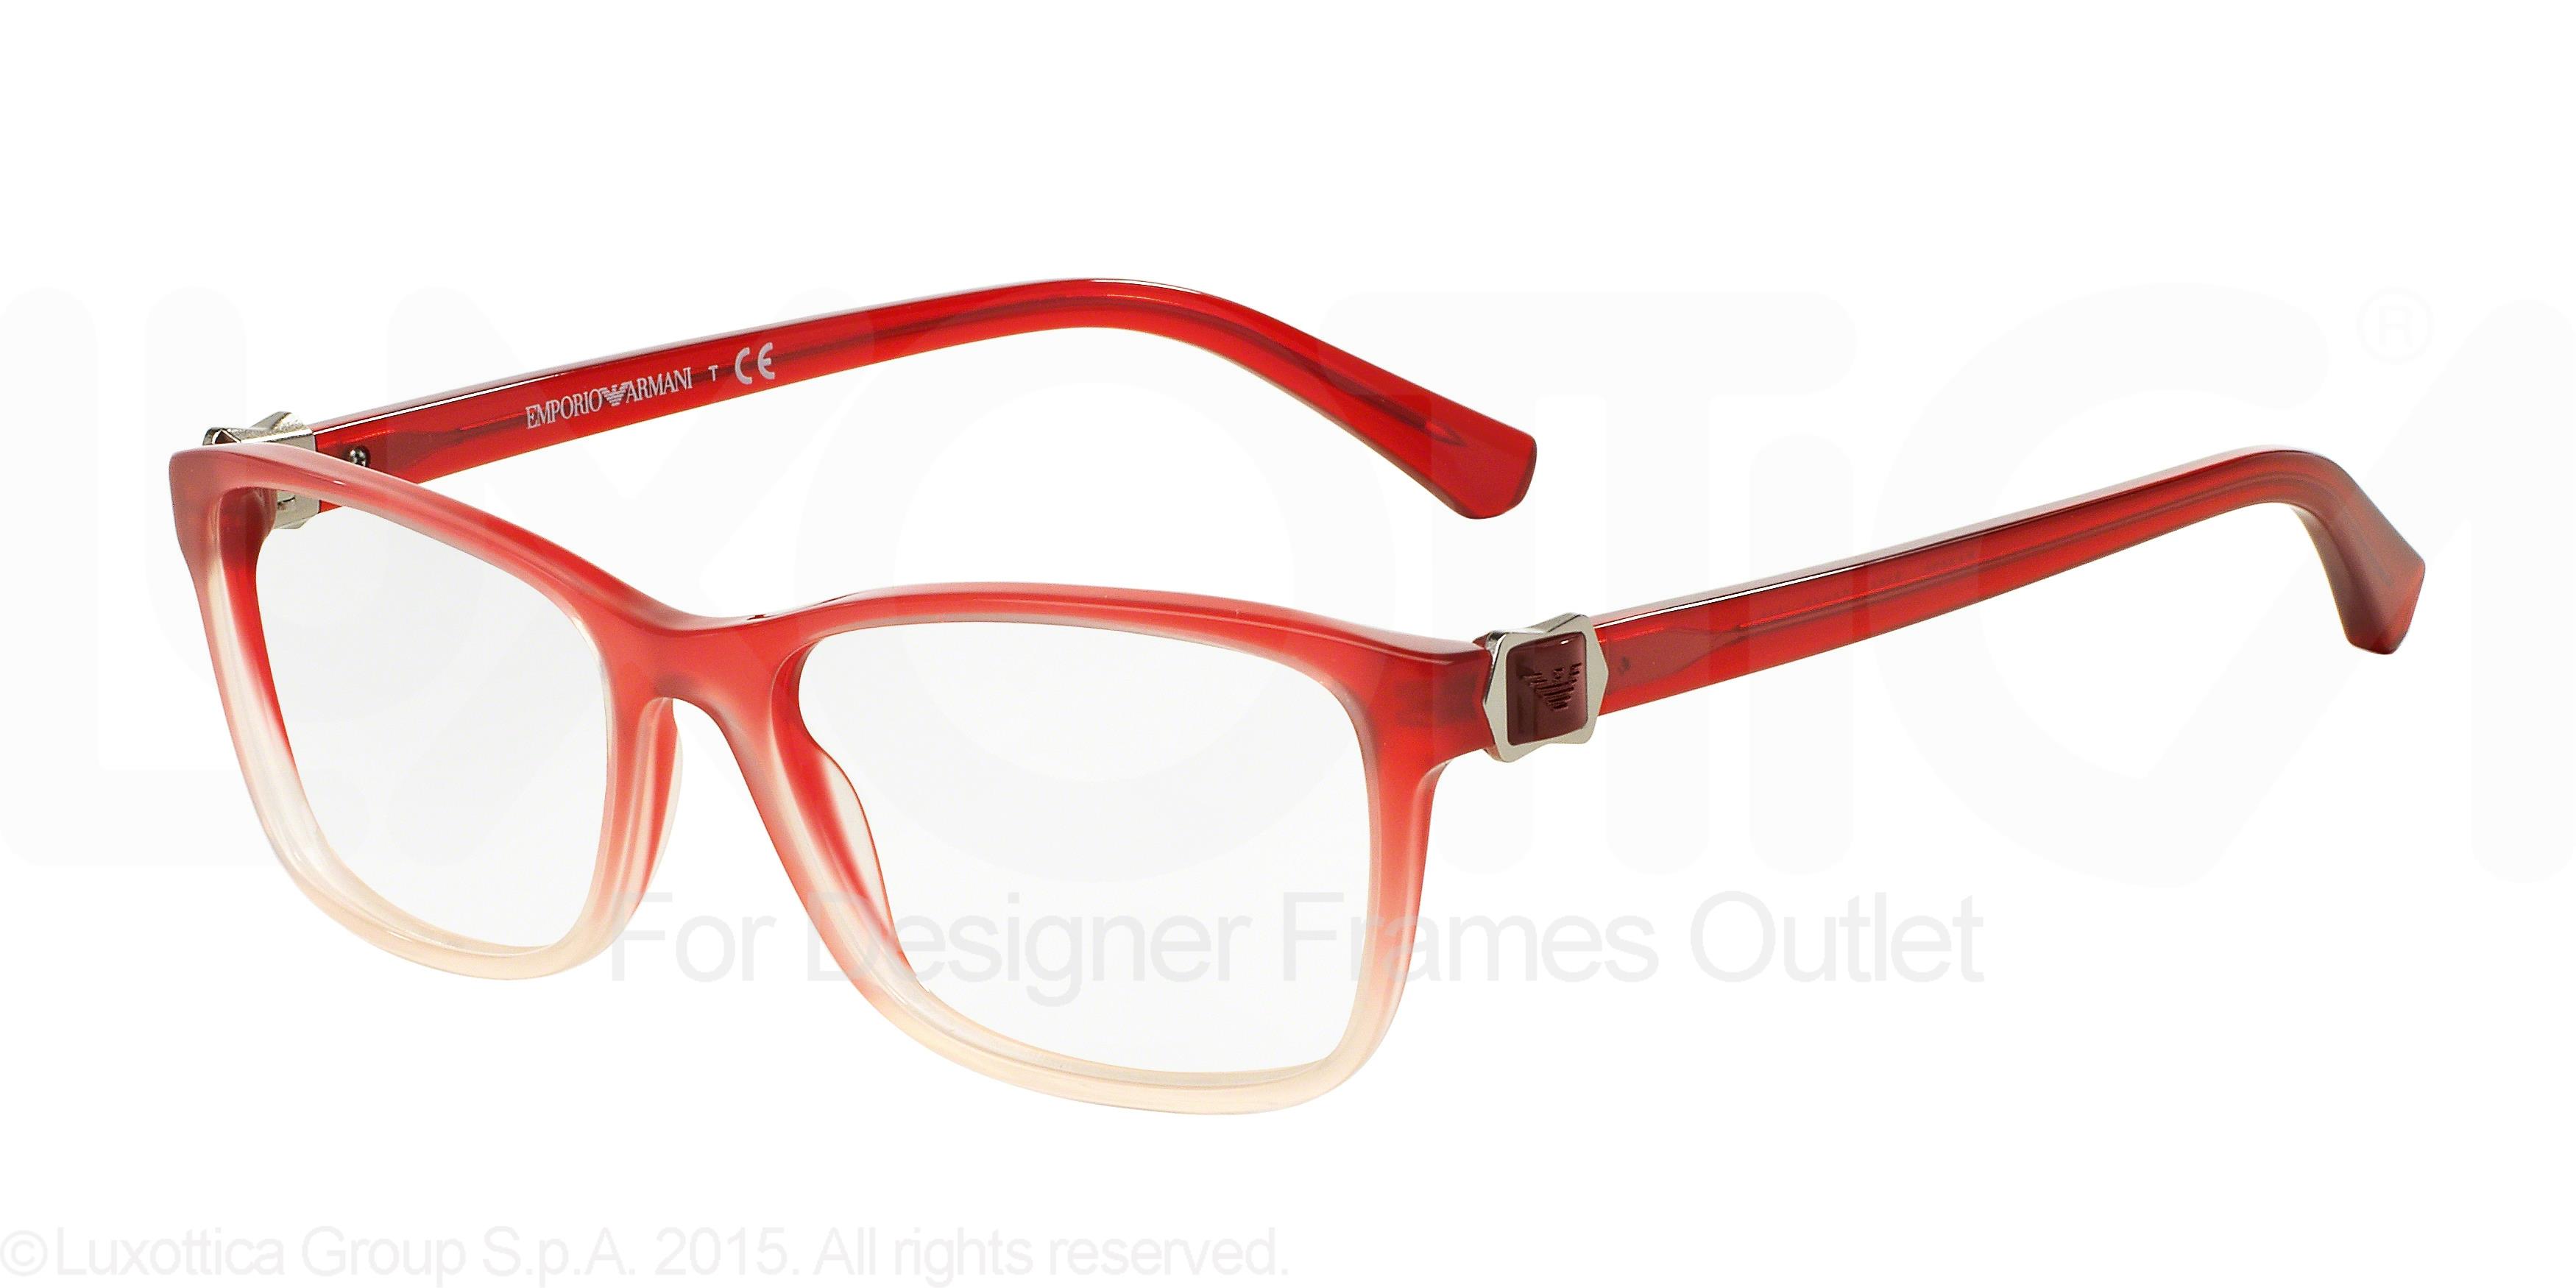 Picture of Emporio Armani Eyeglasses EA3076